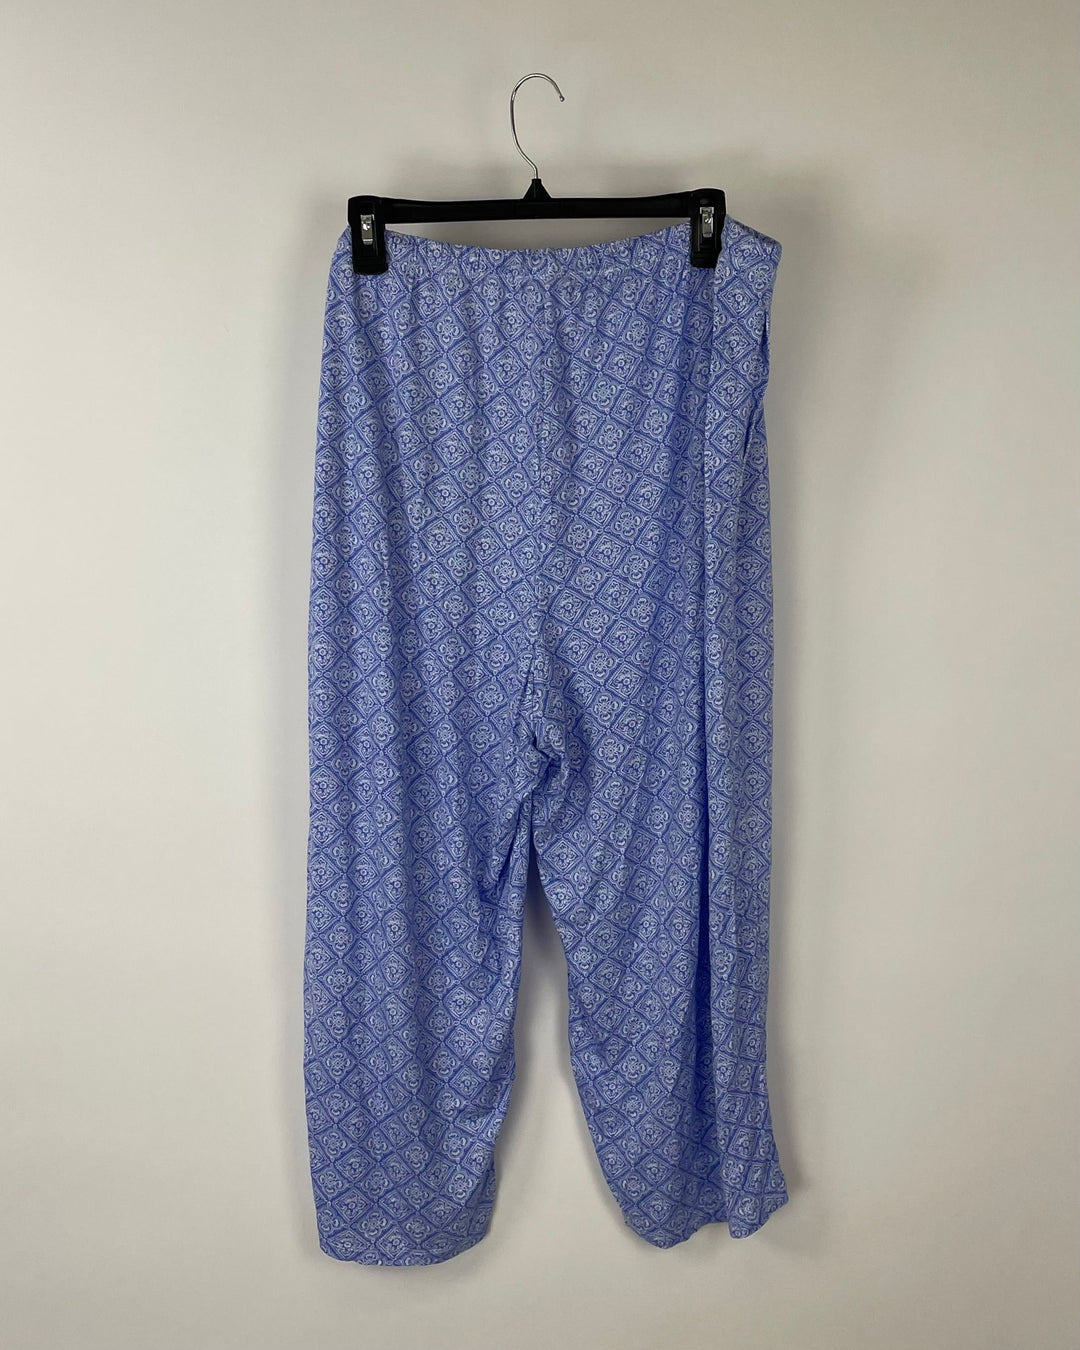 Blue And White Printed Pajama Pants - 1X